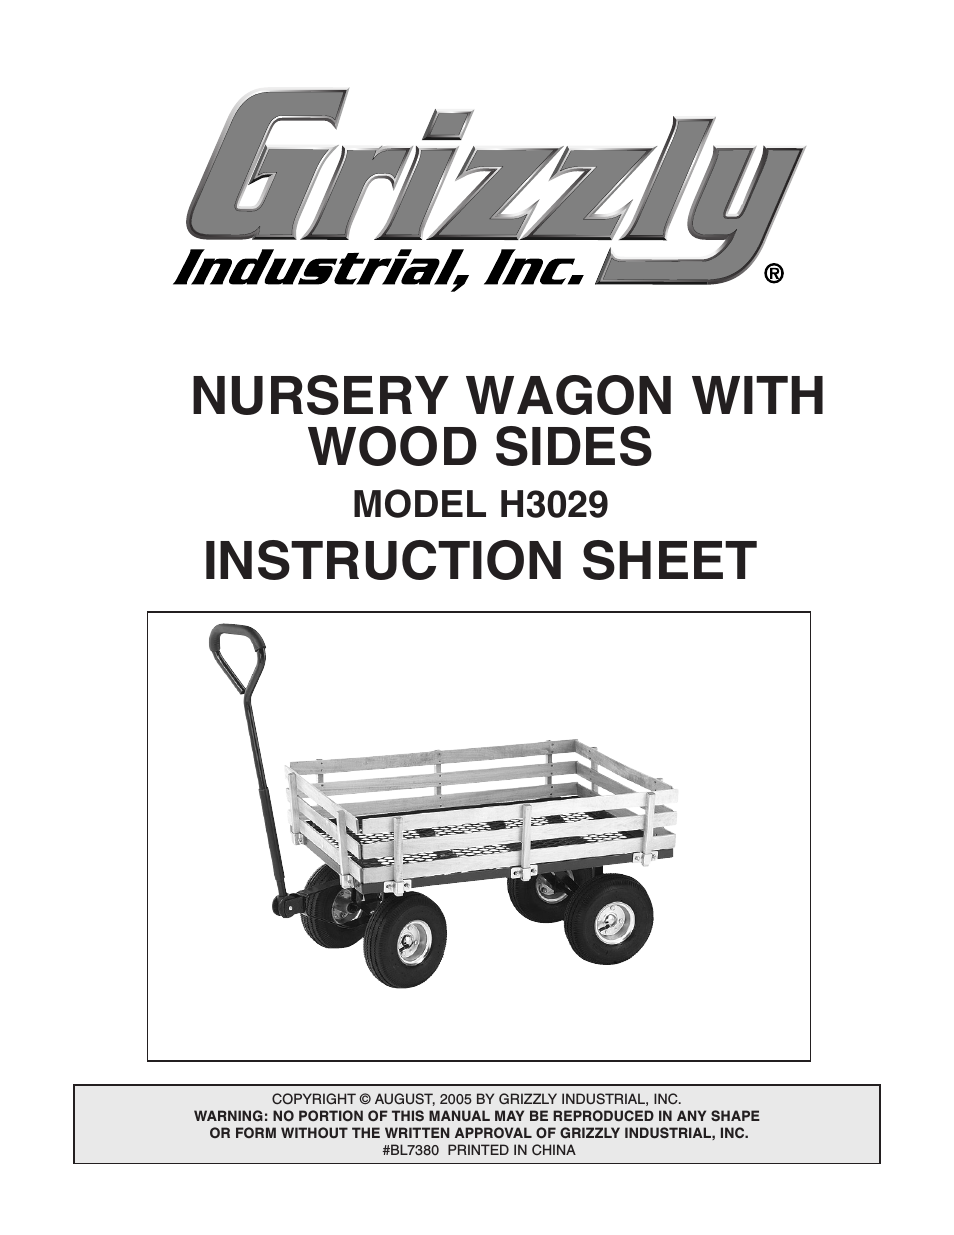 Nursery Wagon with Wood Sides H3029